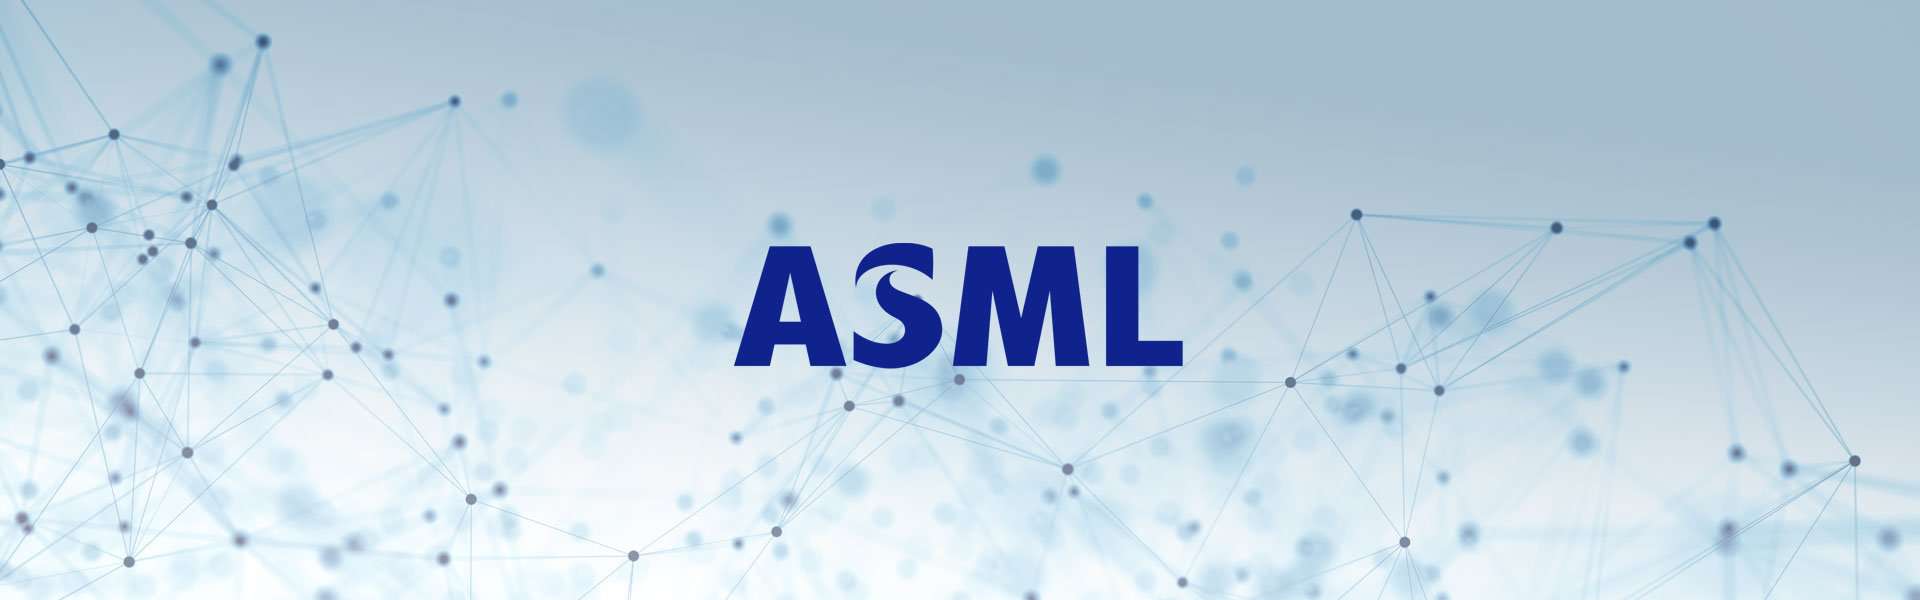 ASML case study